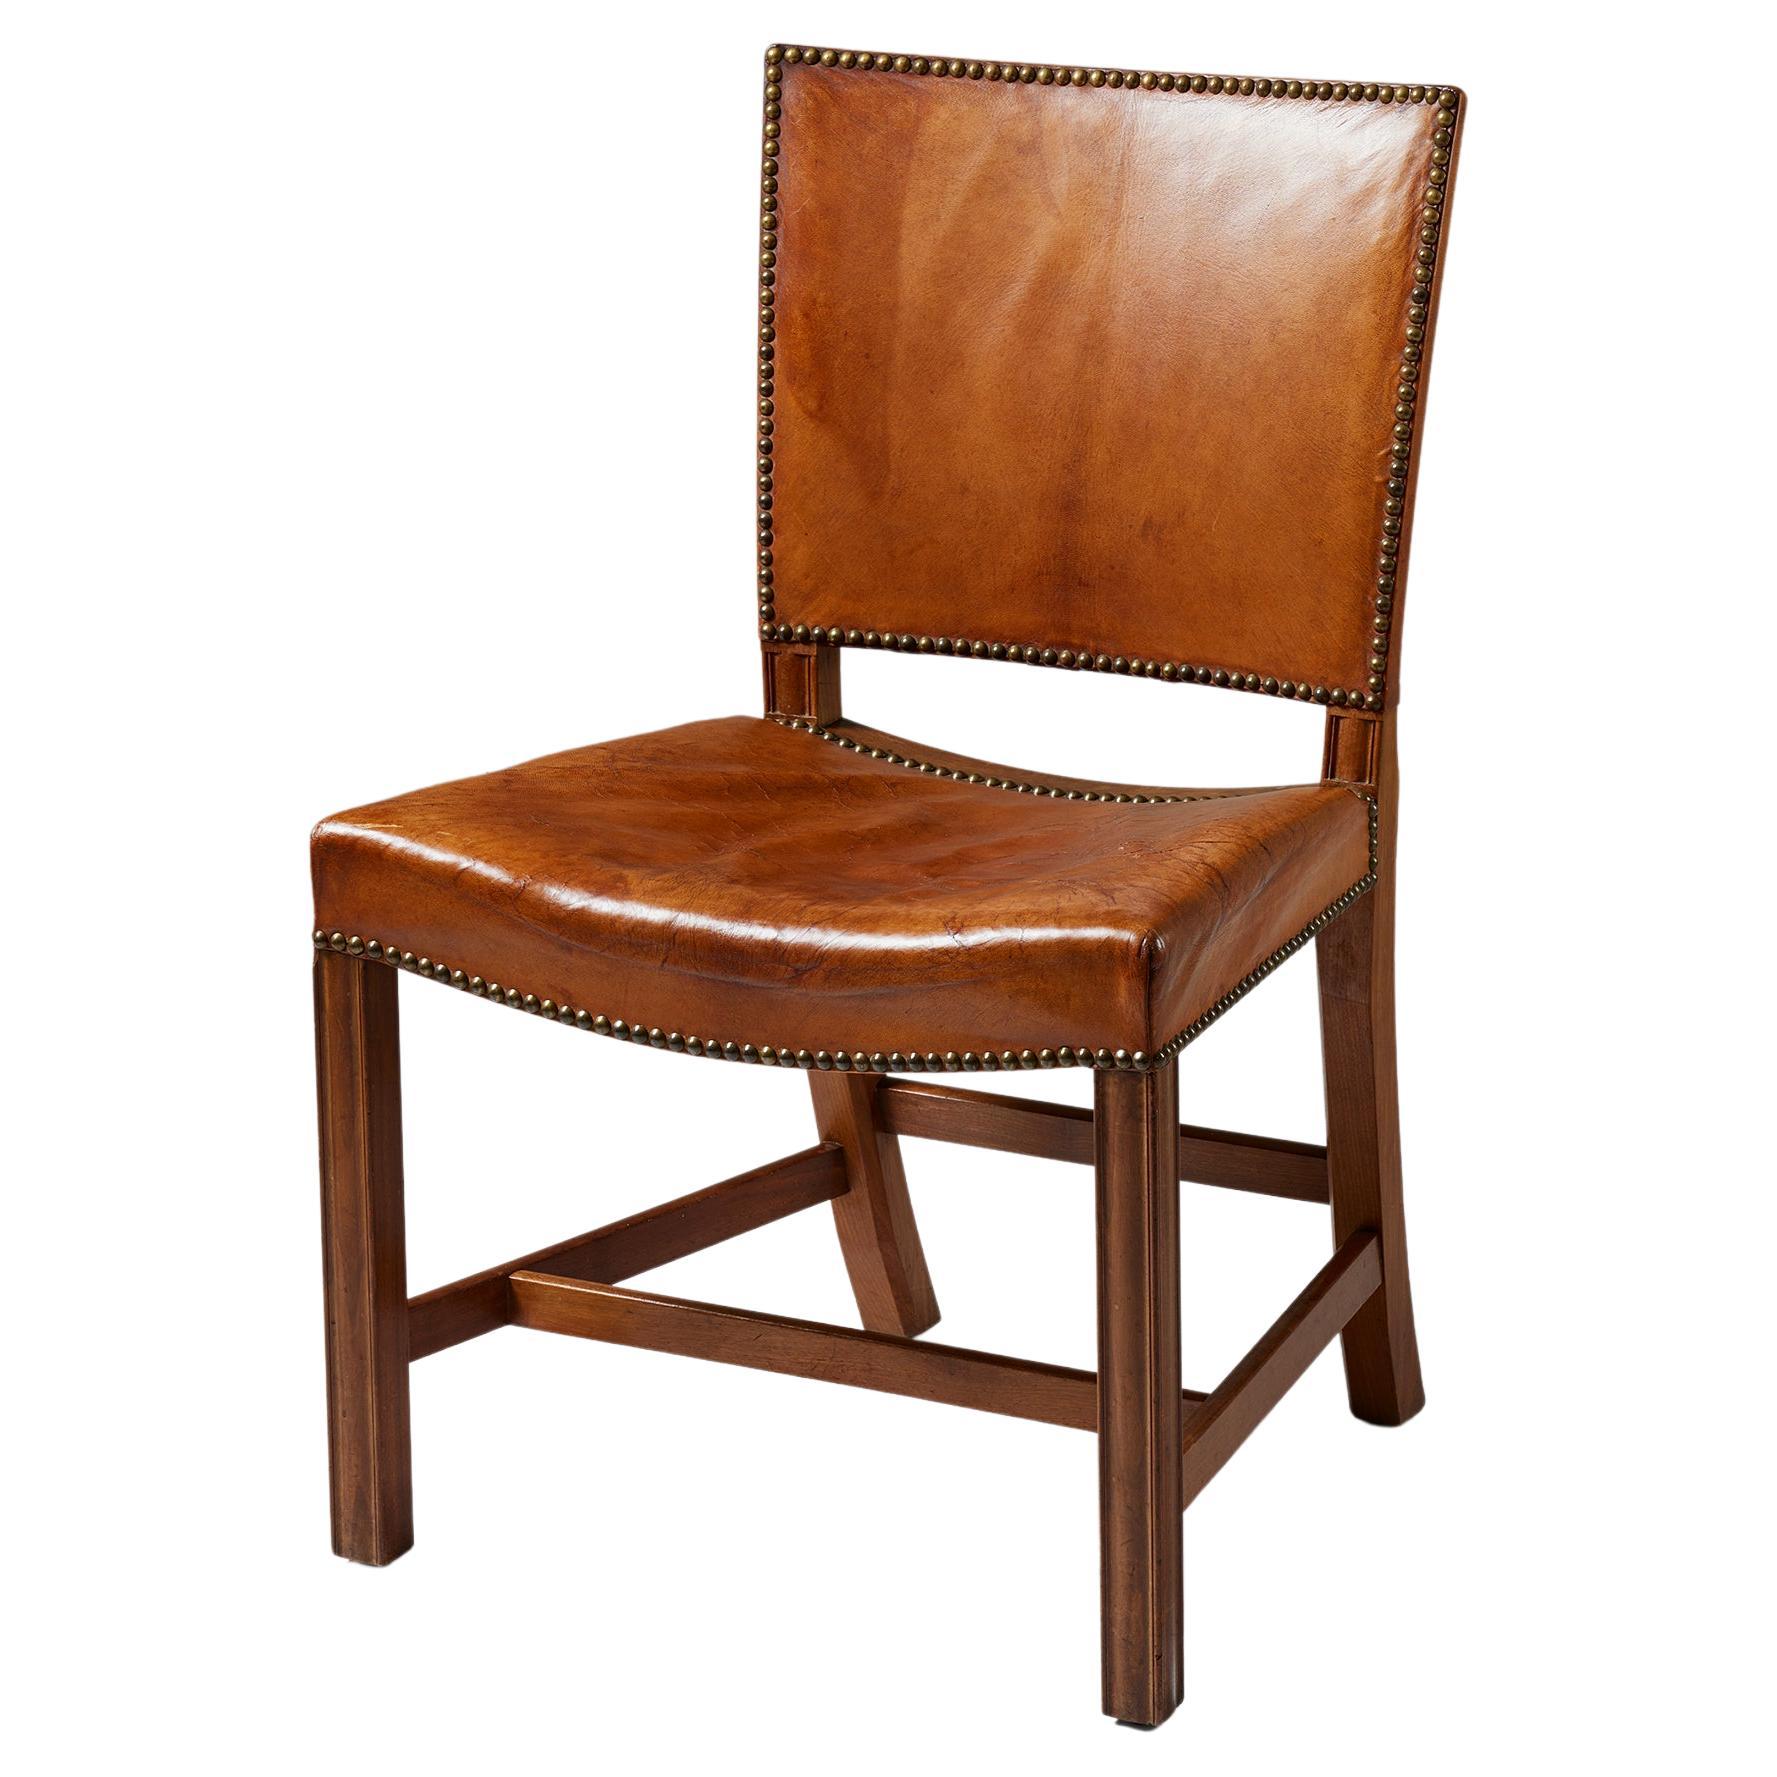 ‘the Red Chair’ Model 3758 Designed by Kaare Klint for Rud. Rasmussen Fabrik